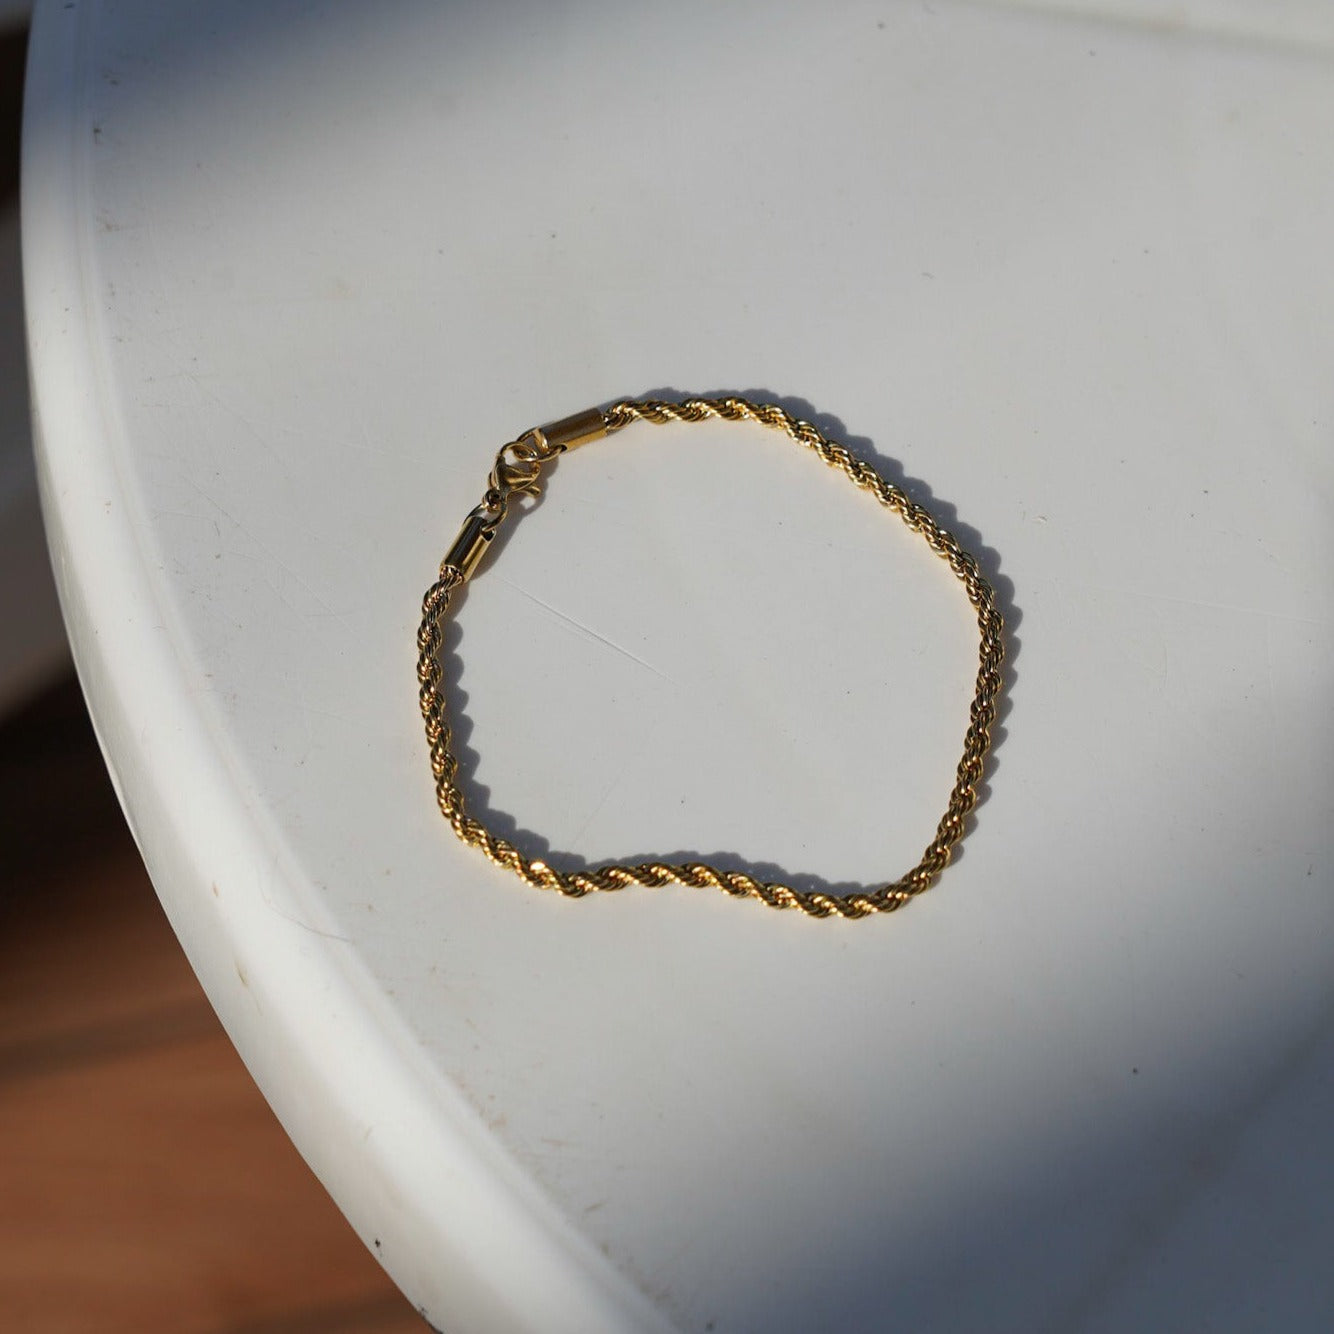 Rope bracelet - Gold-toned